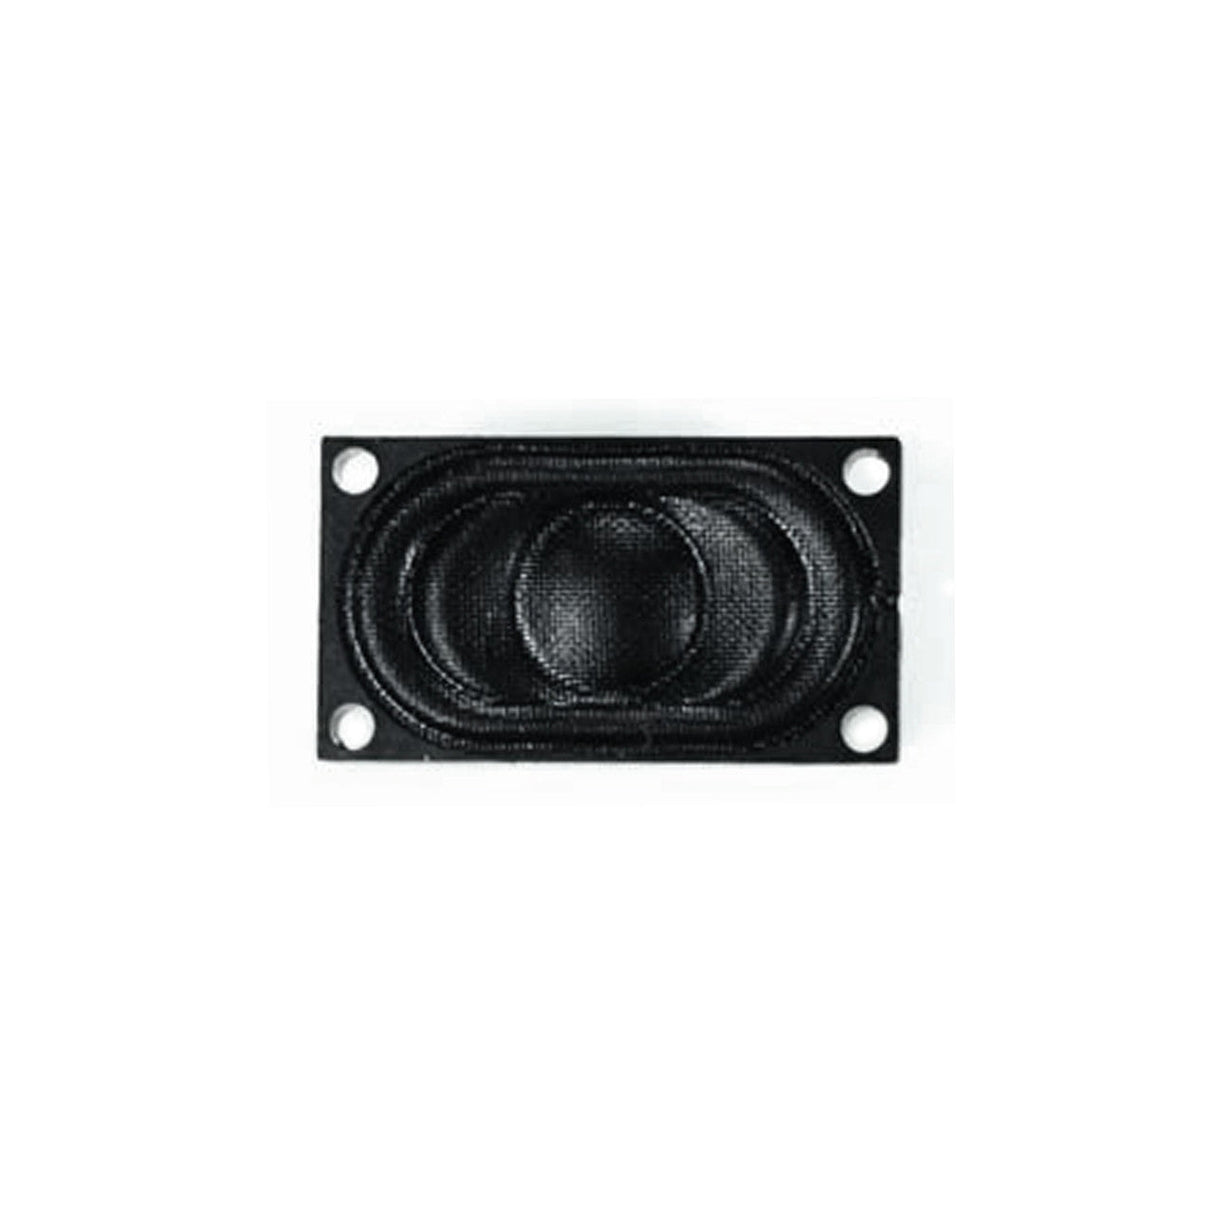 Soundtraxx 35 x 16mm oval, 8-ohm speaker